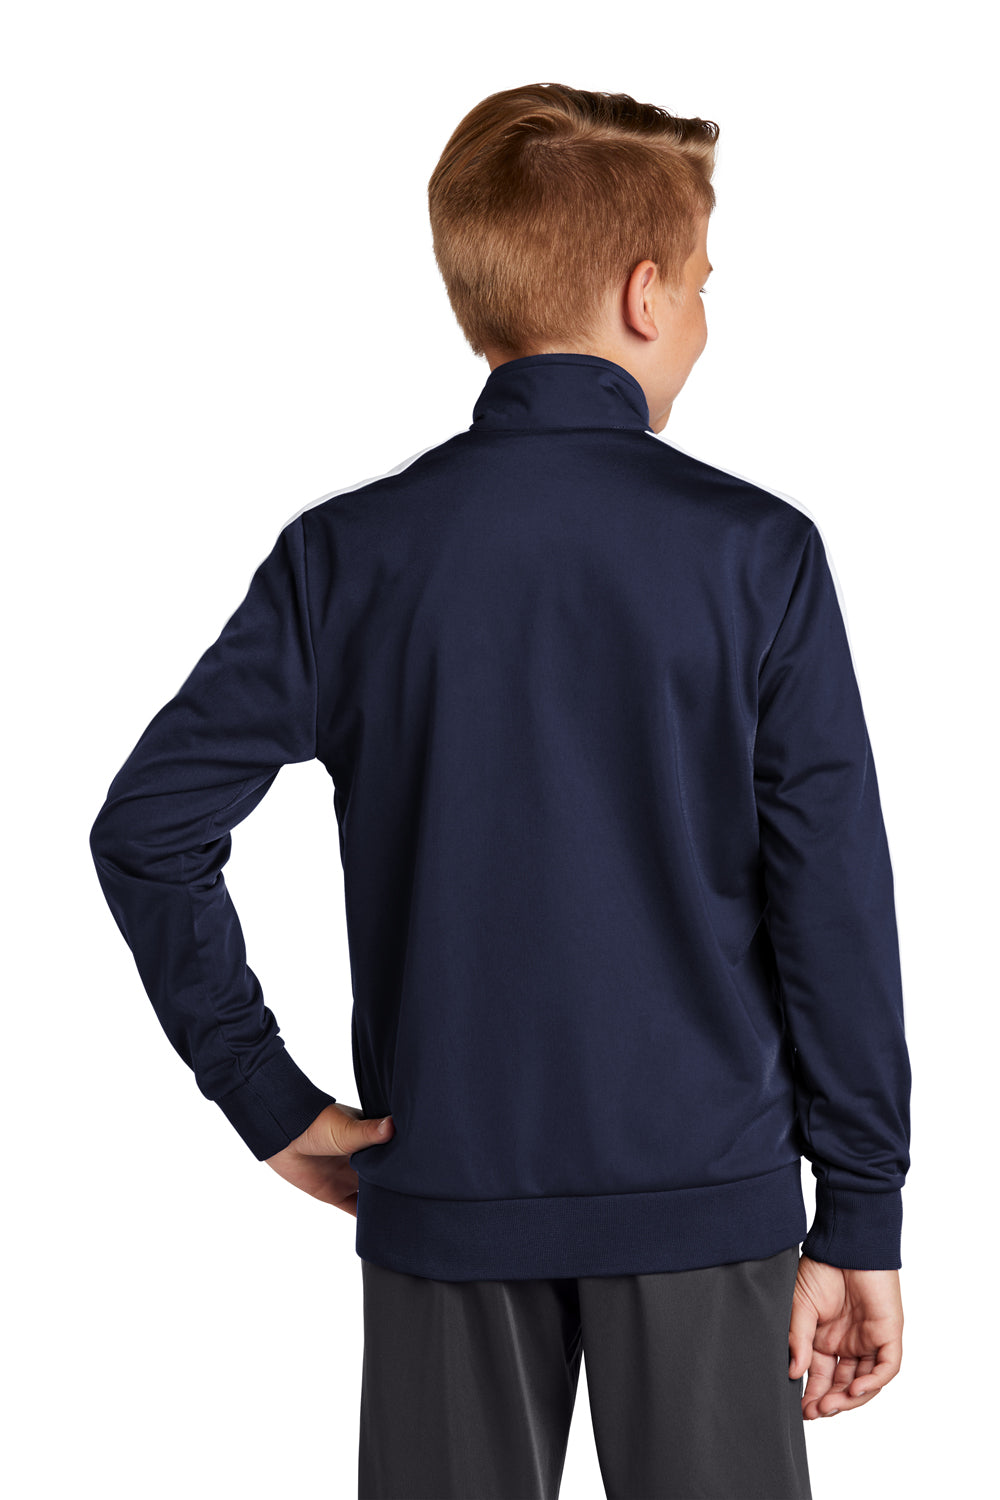 Sport-Tek Youth Full Zip Track Jacket True Navy Blue/White Side